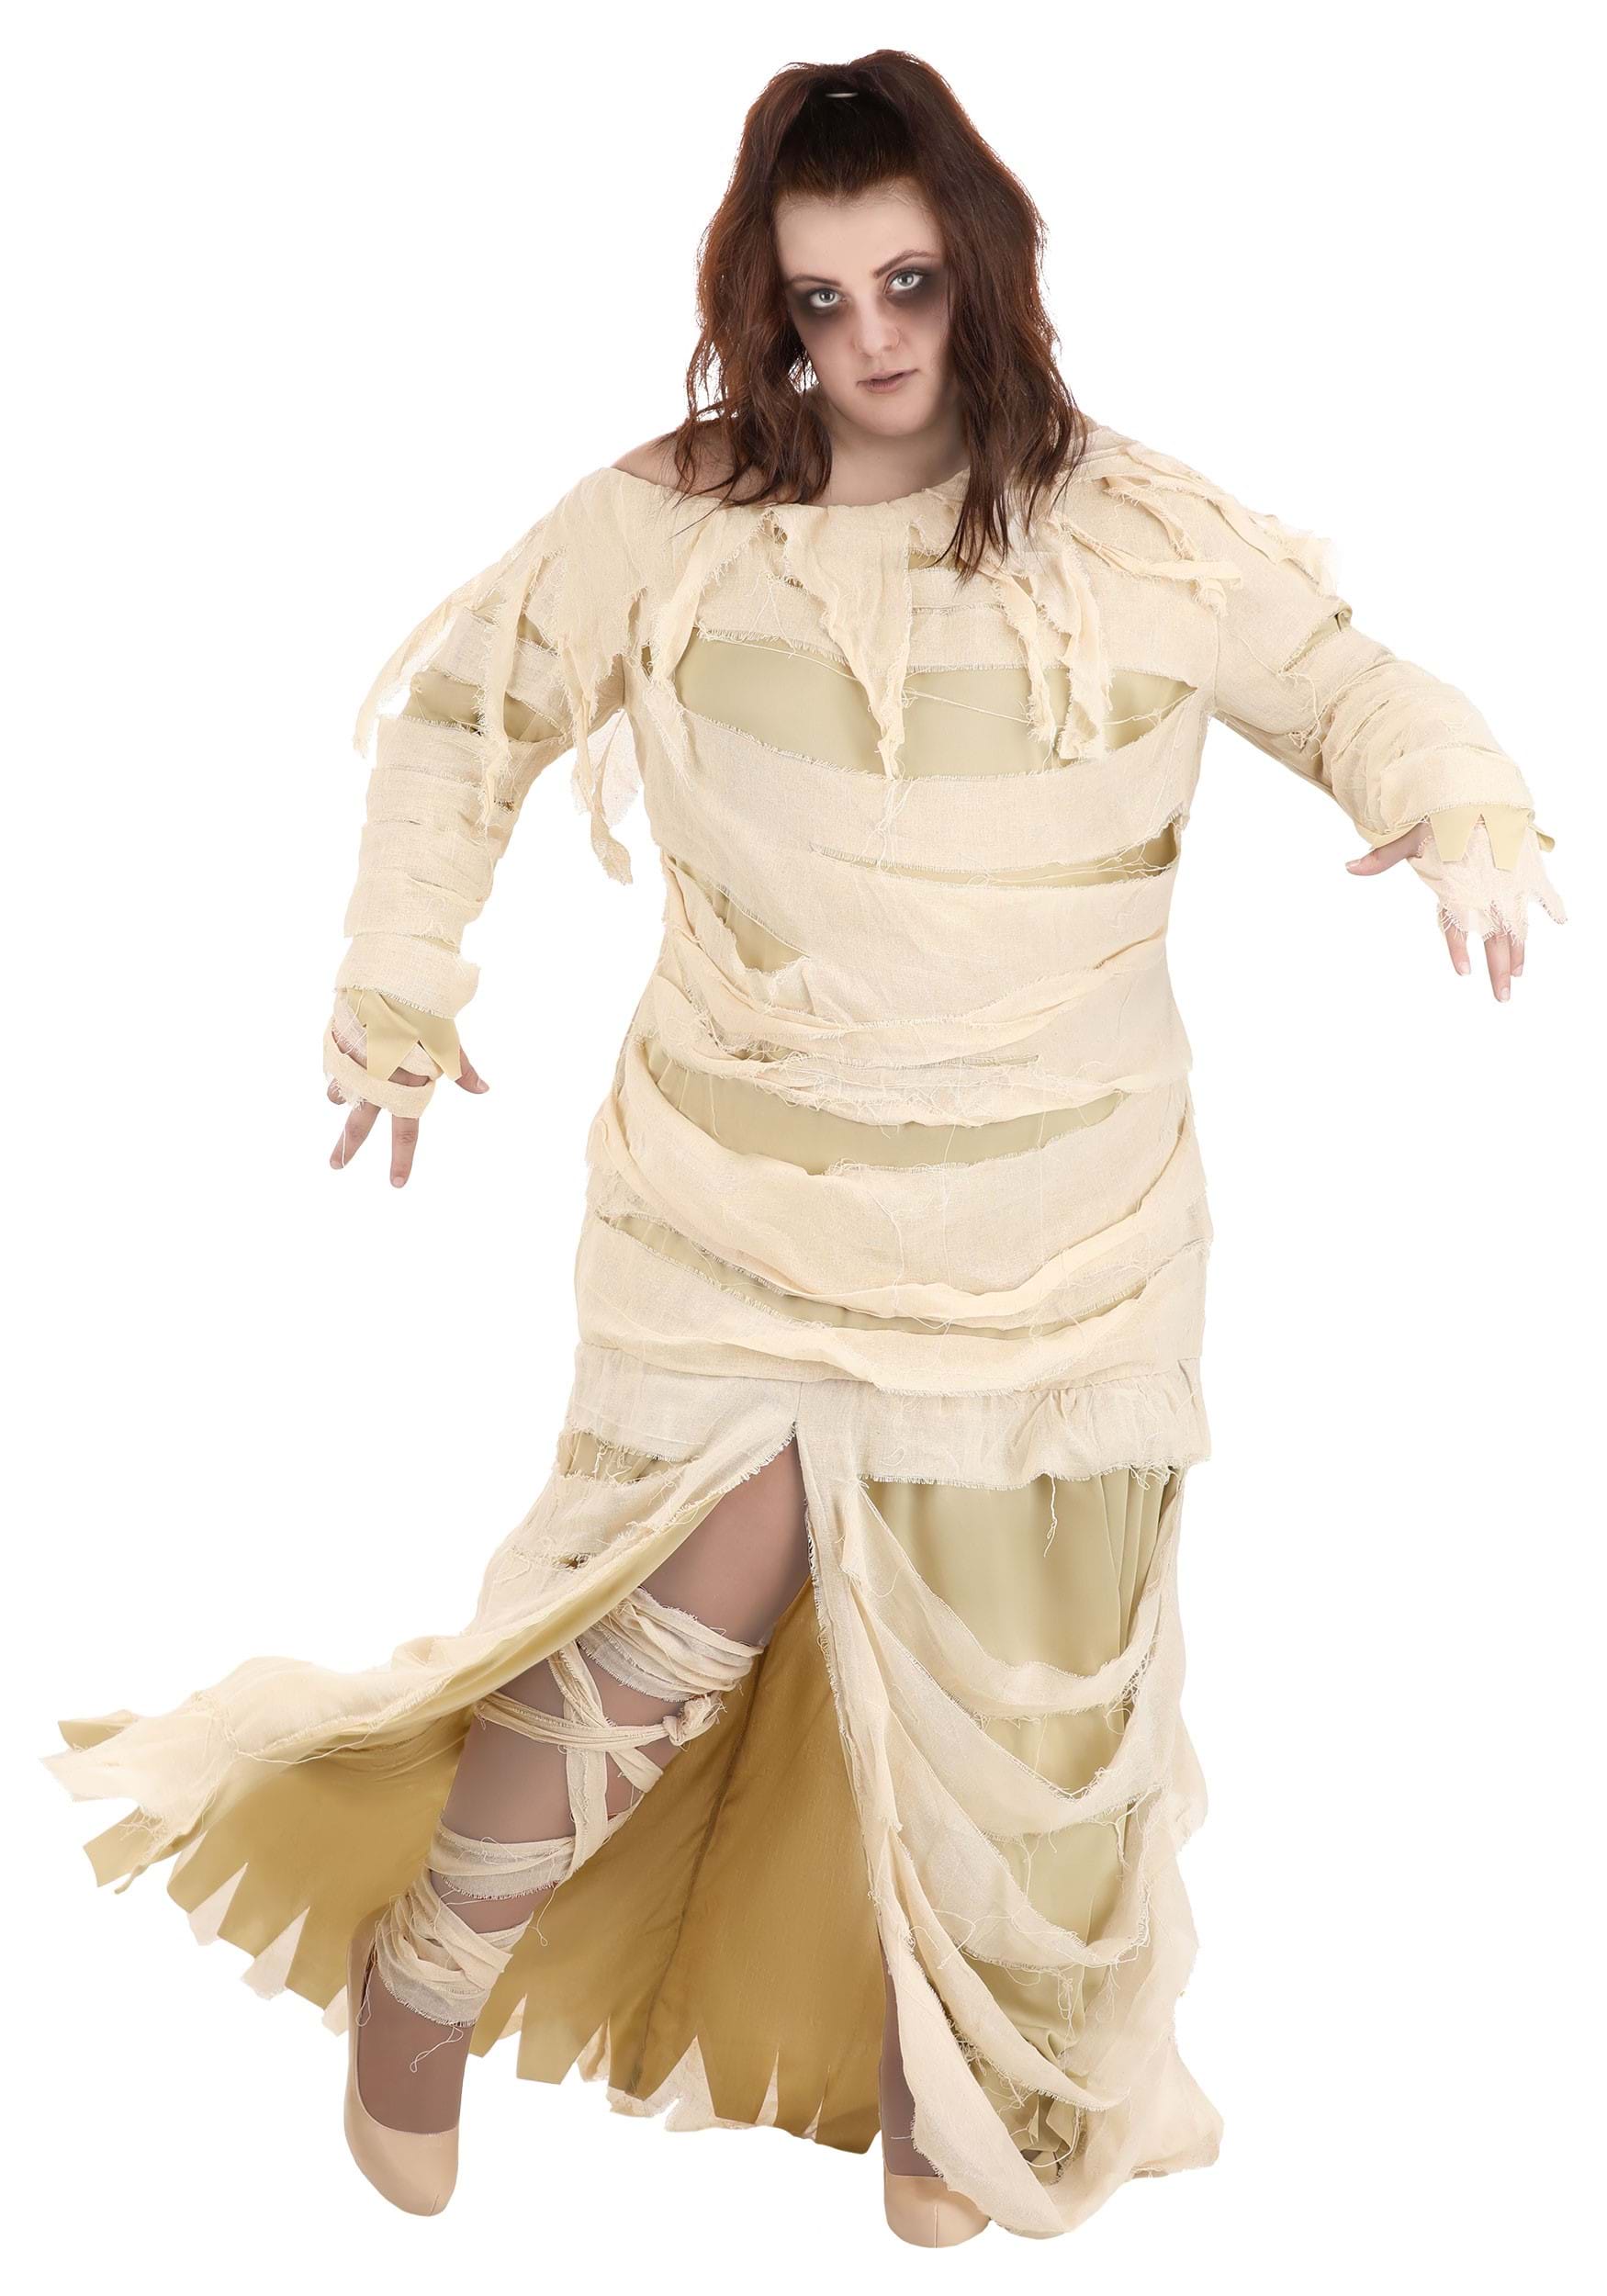 Photos - Fancy Dress FUN Costumes Full Length Mummy Plus Size Costume for Women Brown FUN1211PL